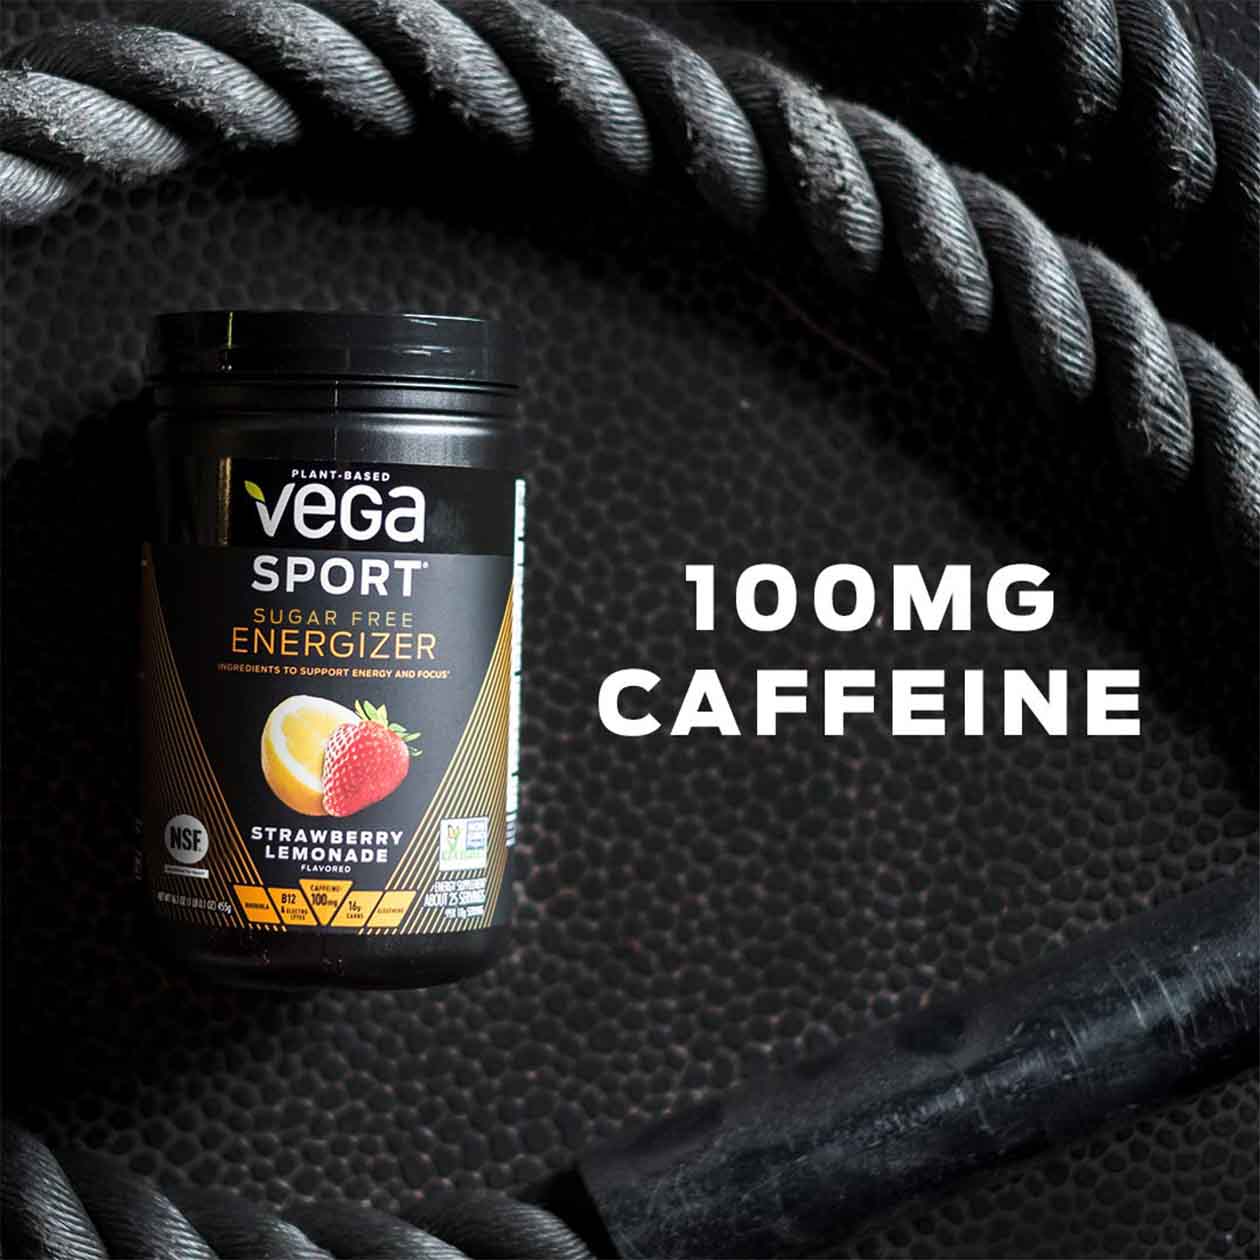 Vega Sport® Sugar-Free Pre-workout Energizer